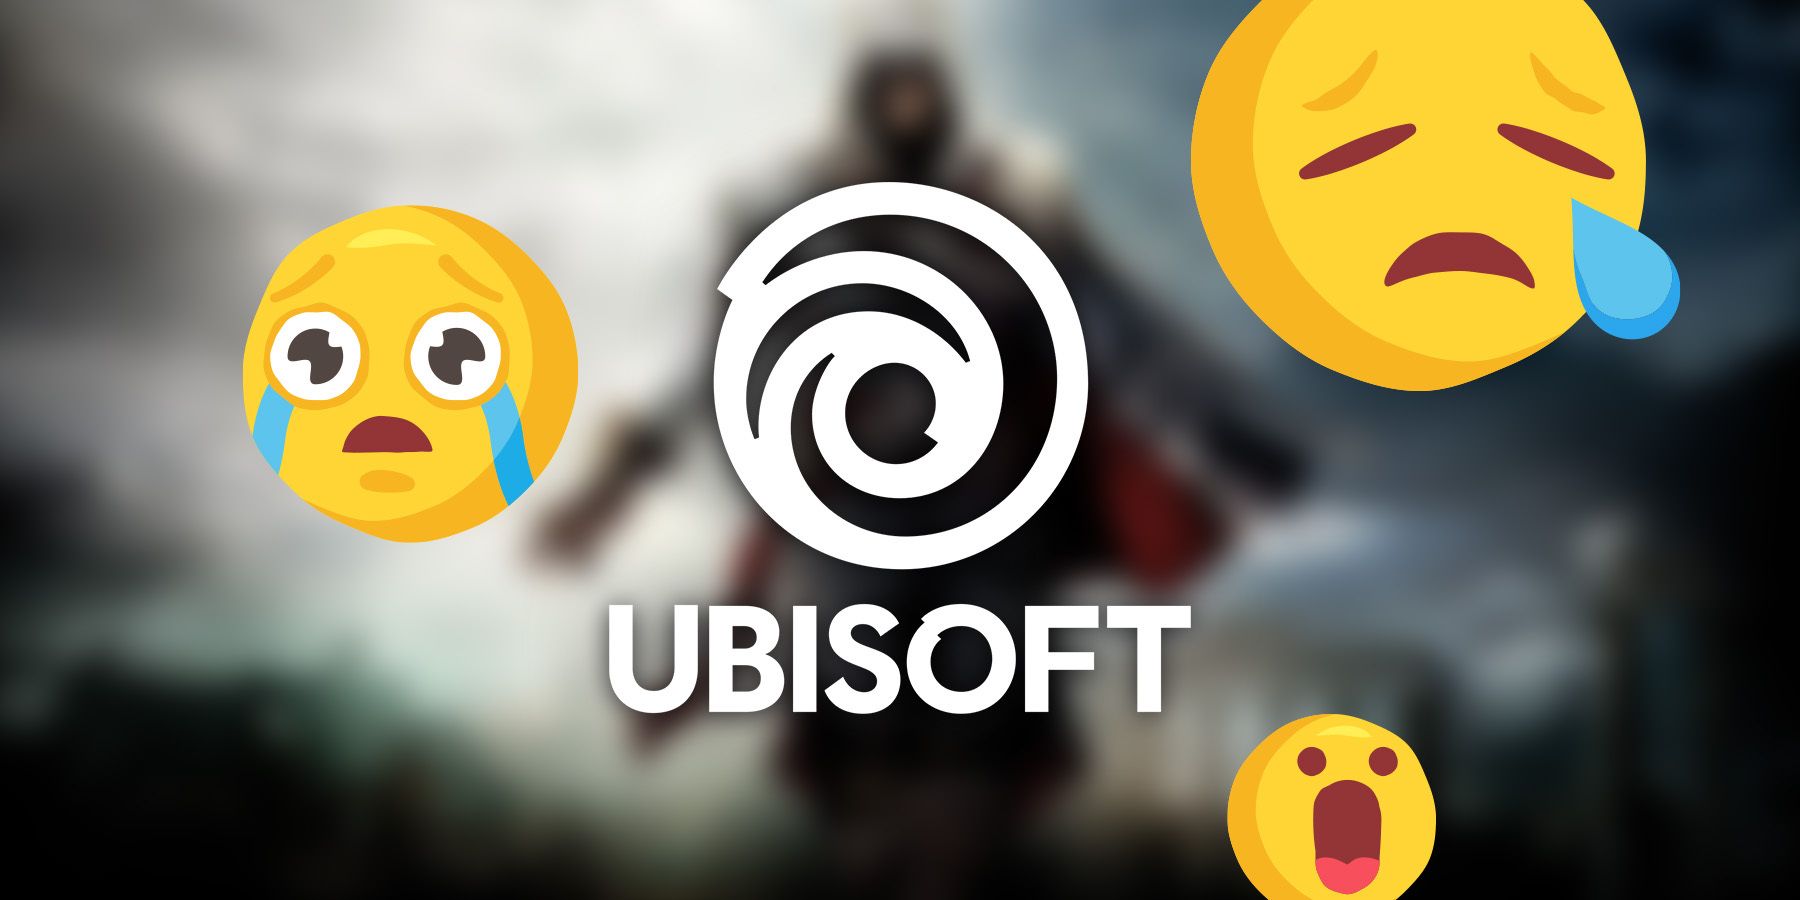 ubisoft games shutting down